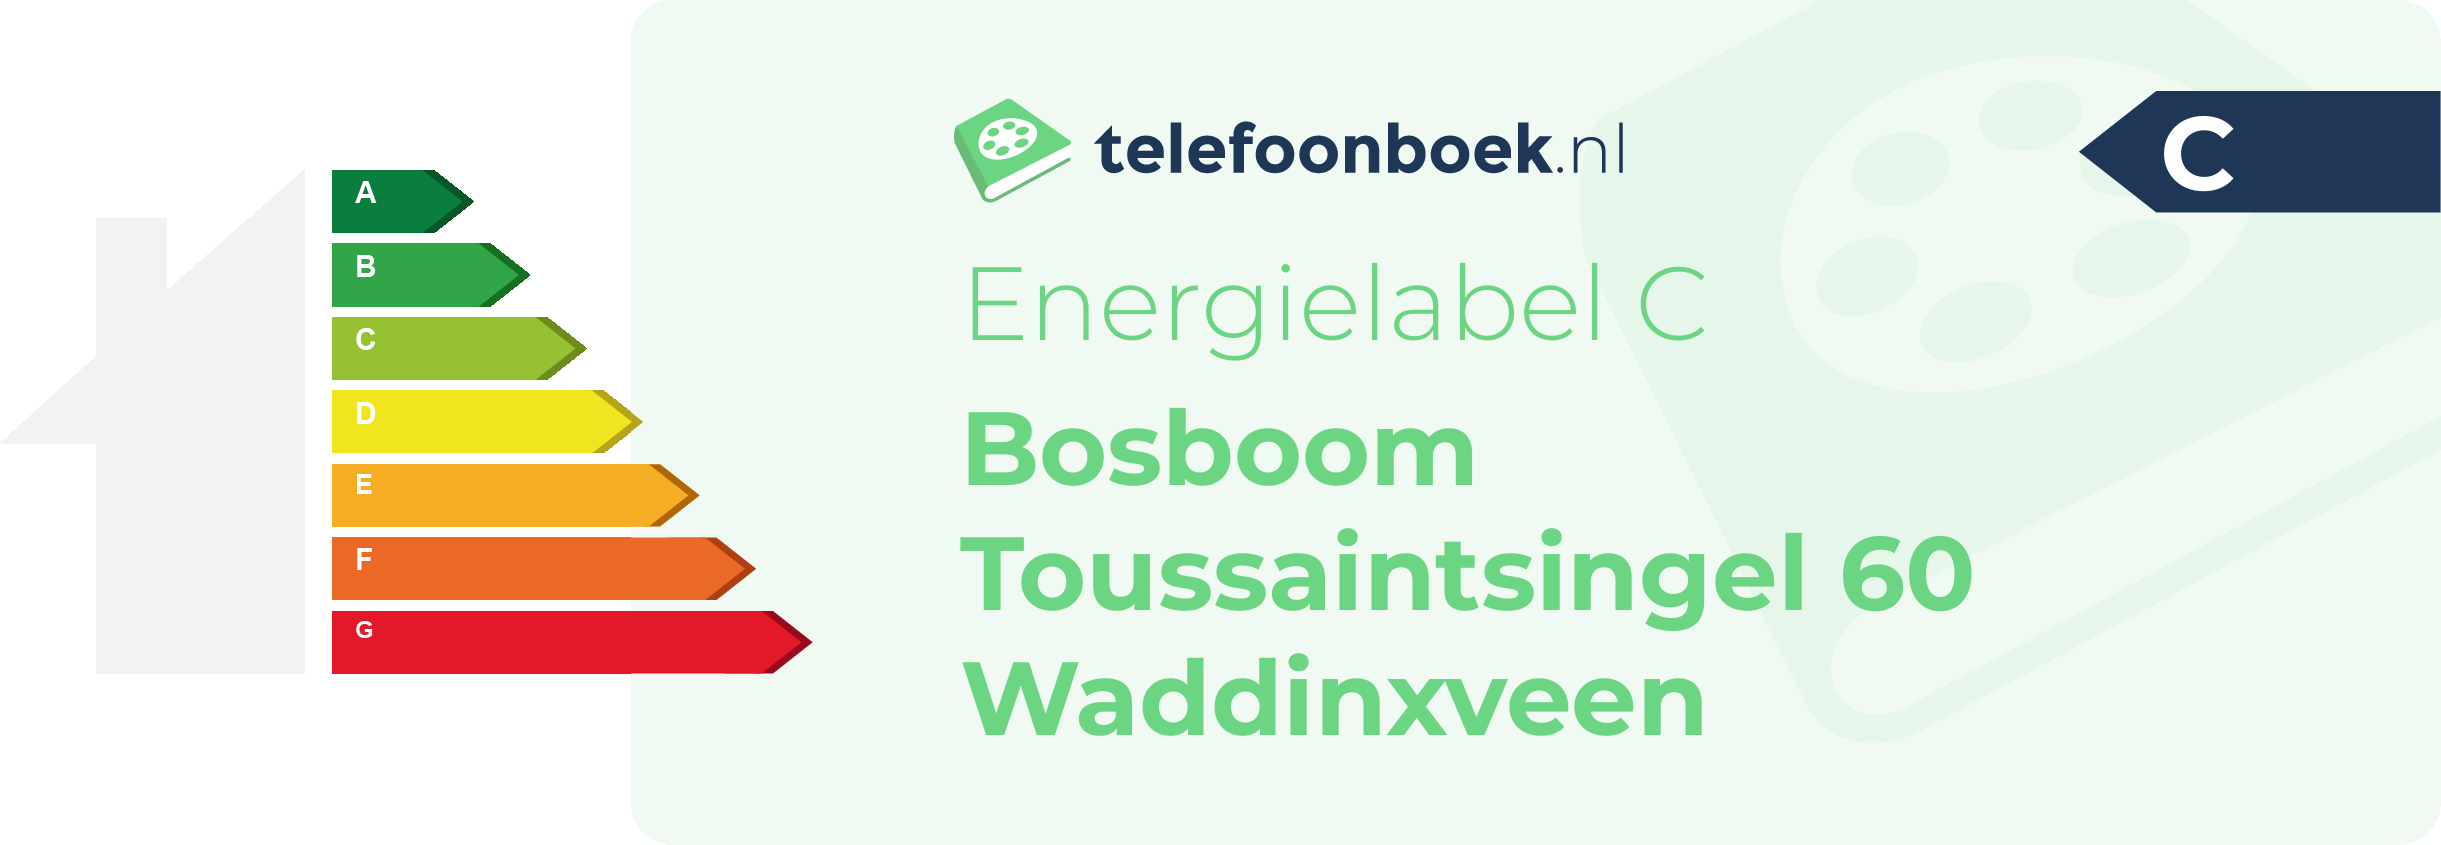 Energielabel Bosboom Toussaintsingel 60 Waddinxveen